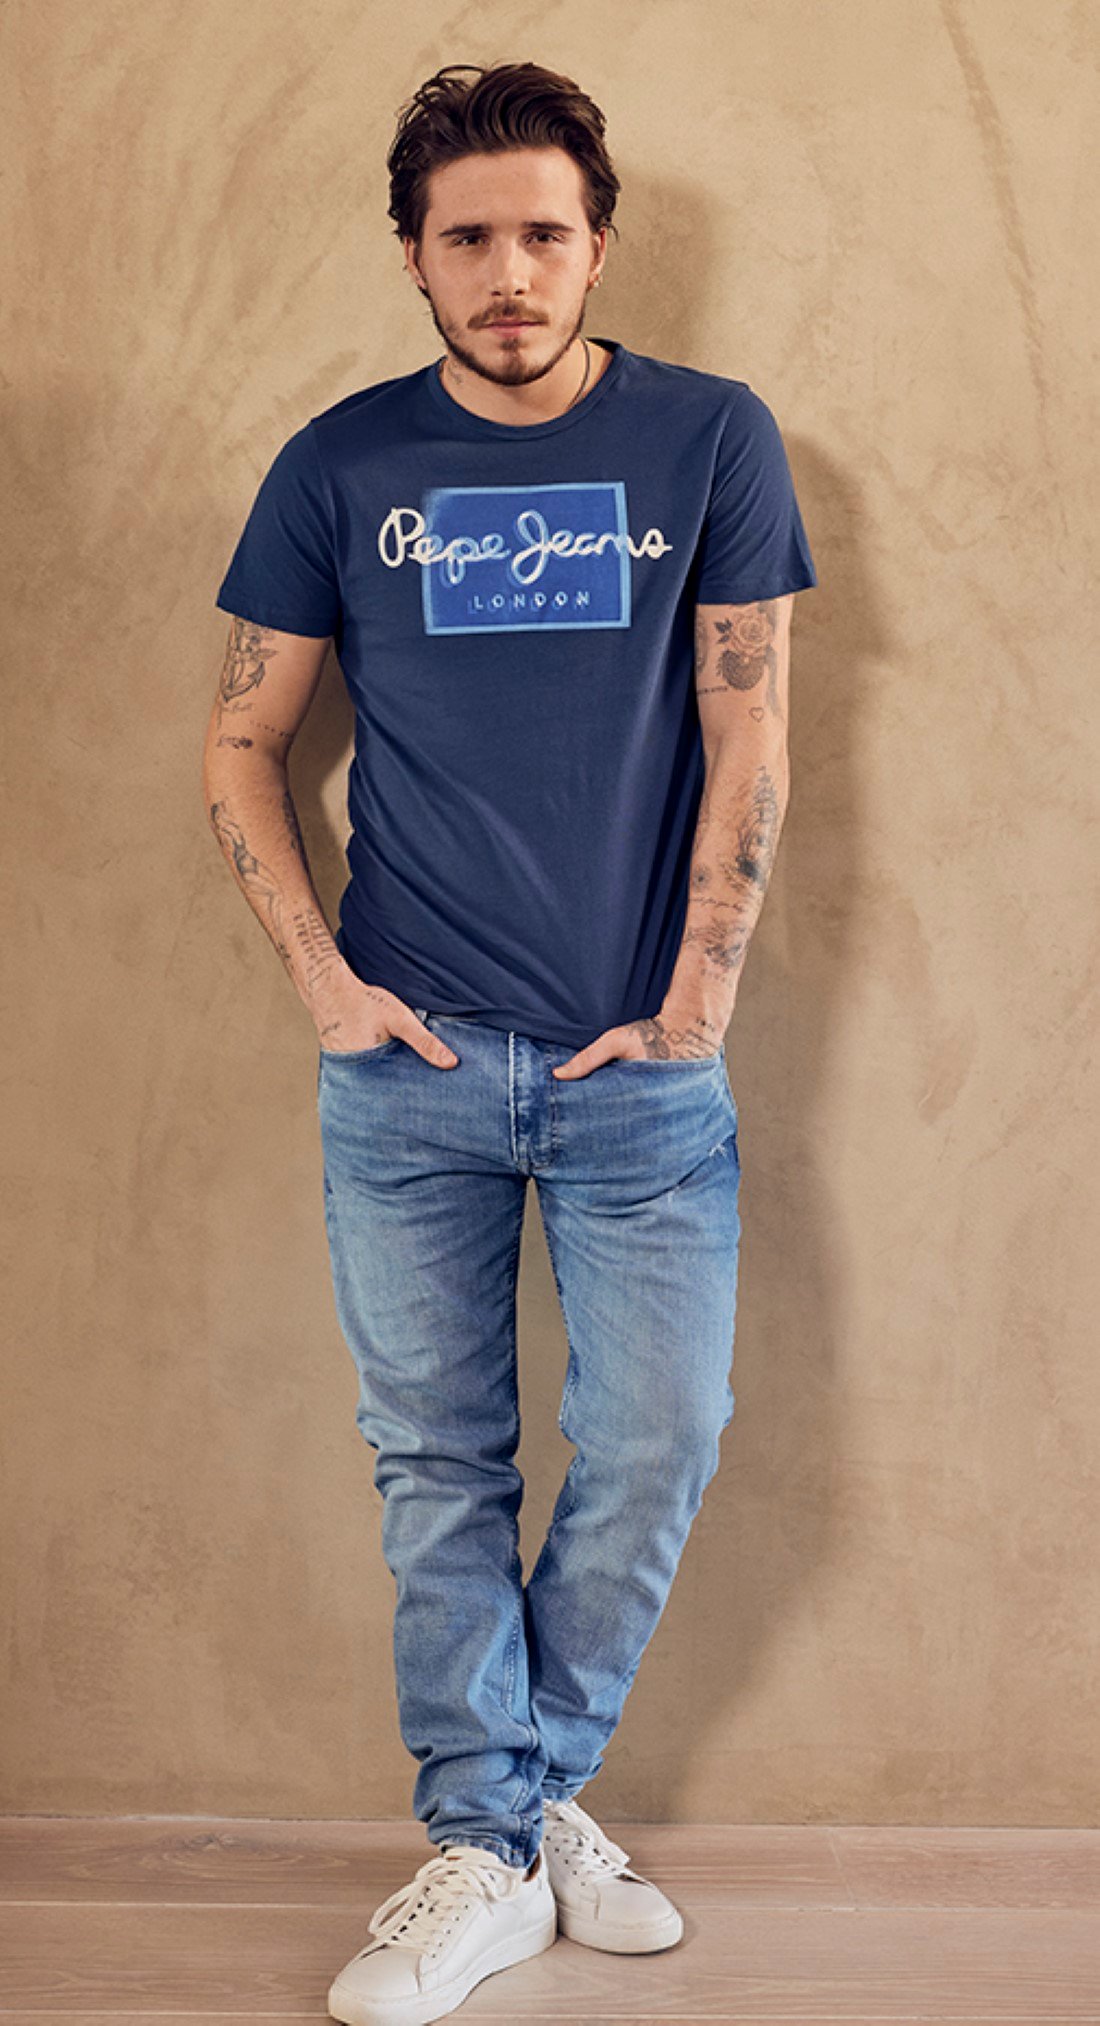 Brooklyn Beckham x Pepe Jeans